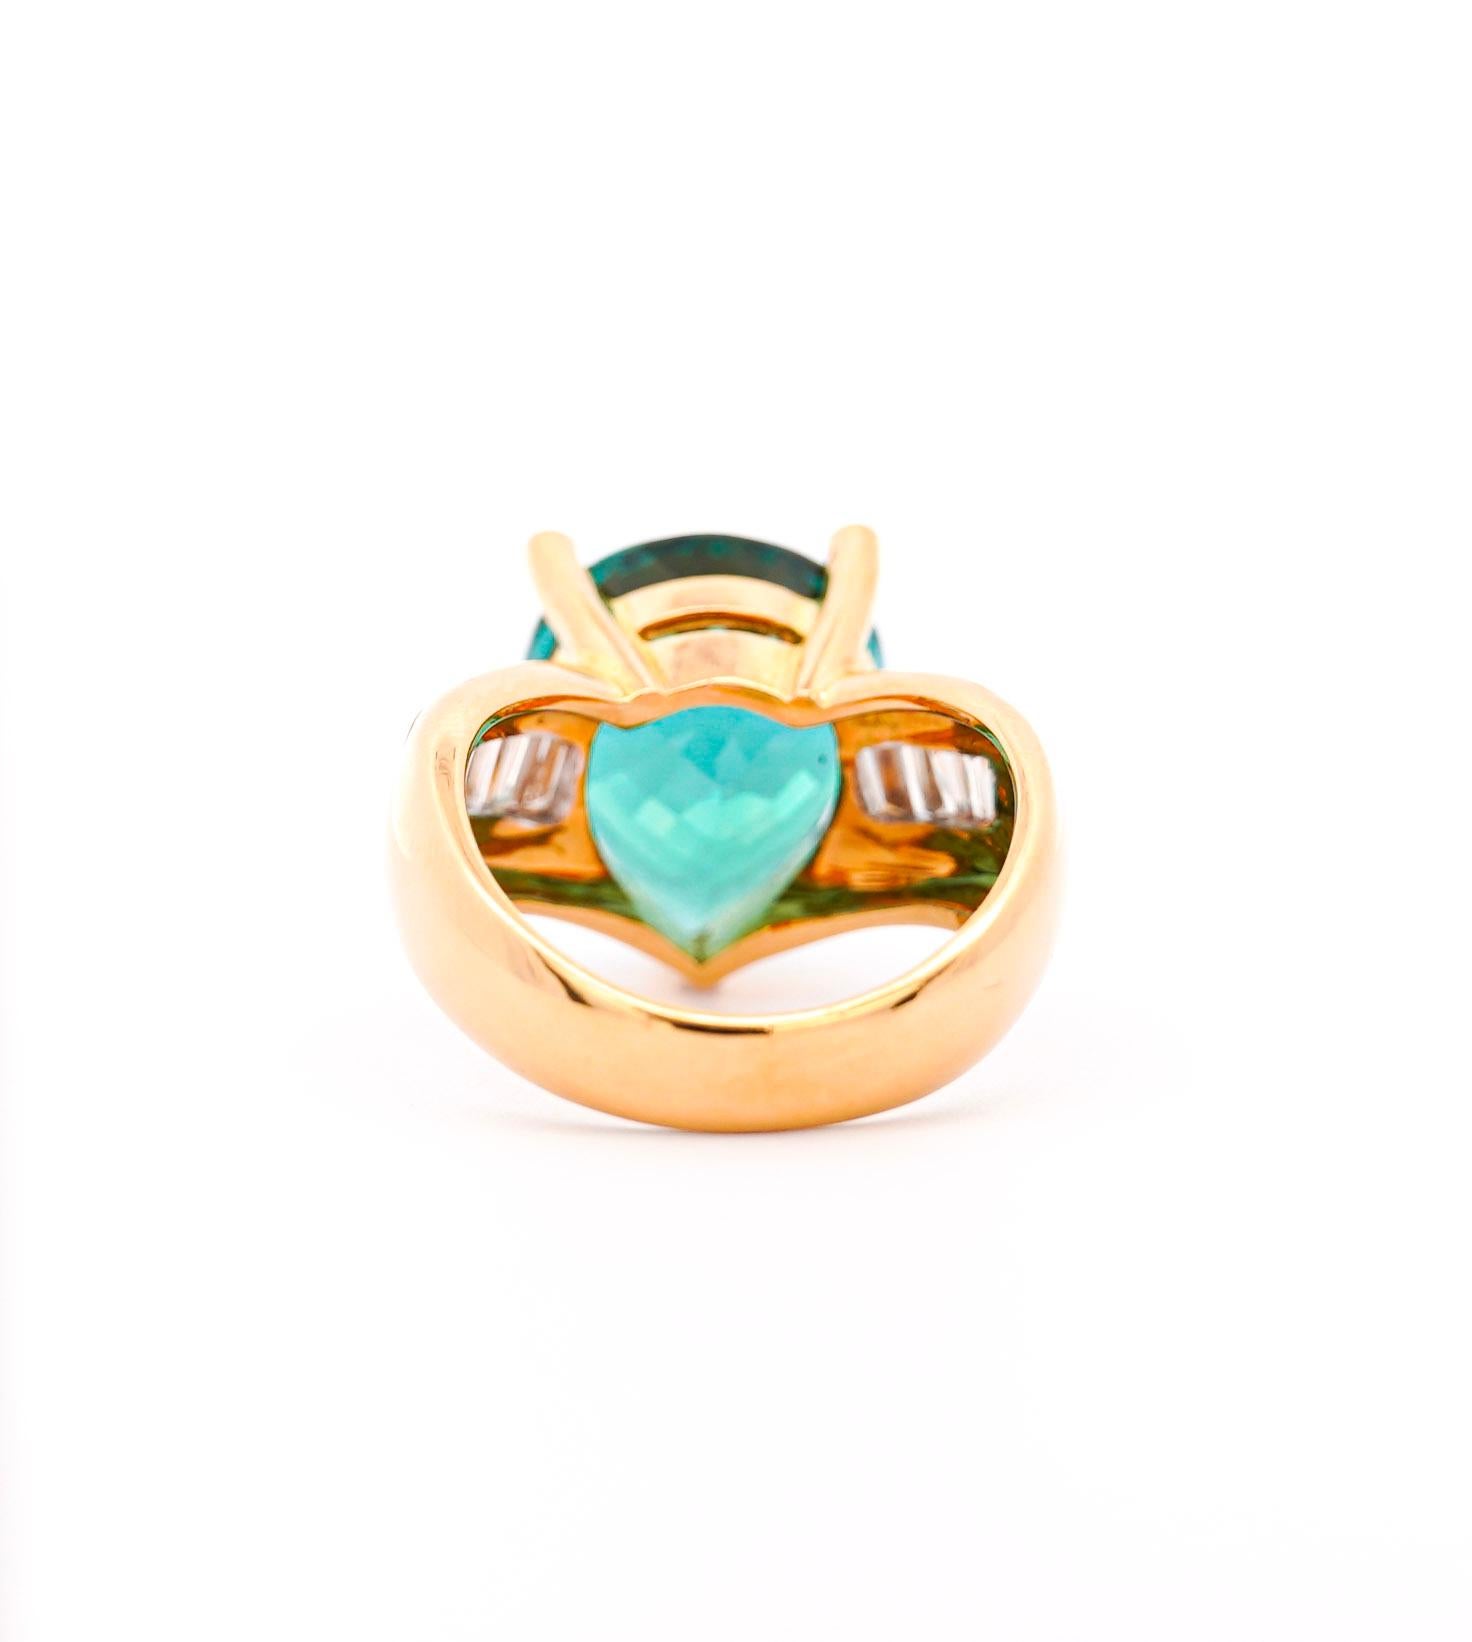 Baroque GIA Certified 11 Carat Bluish Green Pear-Cut Tourmaline & Diamond 18K Gold Ring For Sale